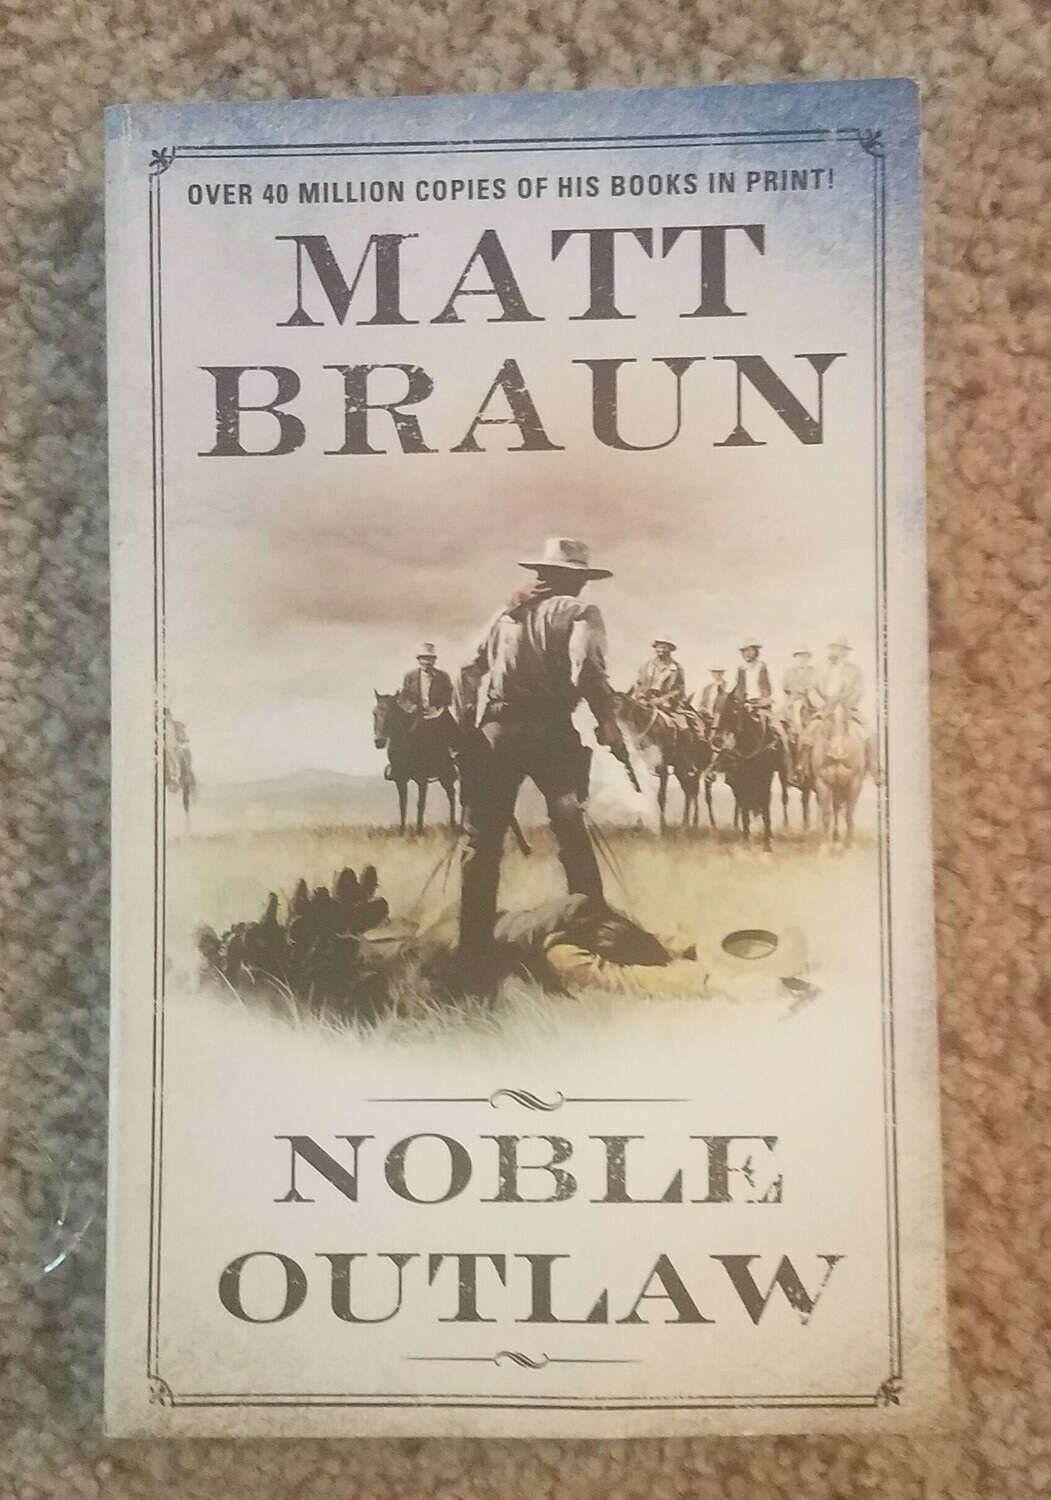 Noble Outlaw by Matt Braun